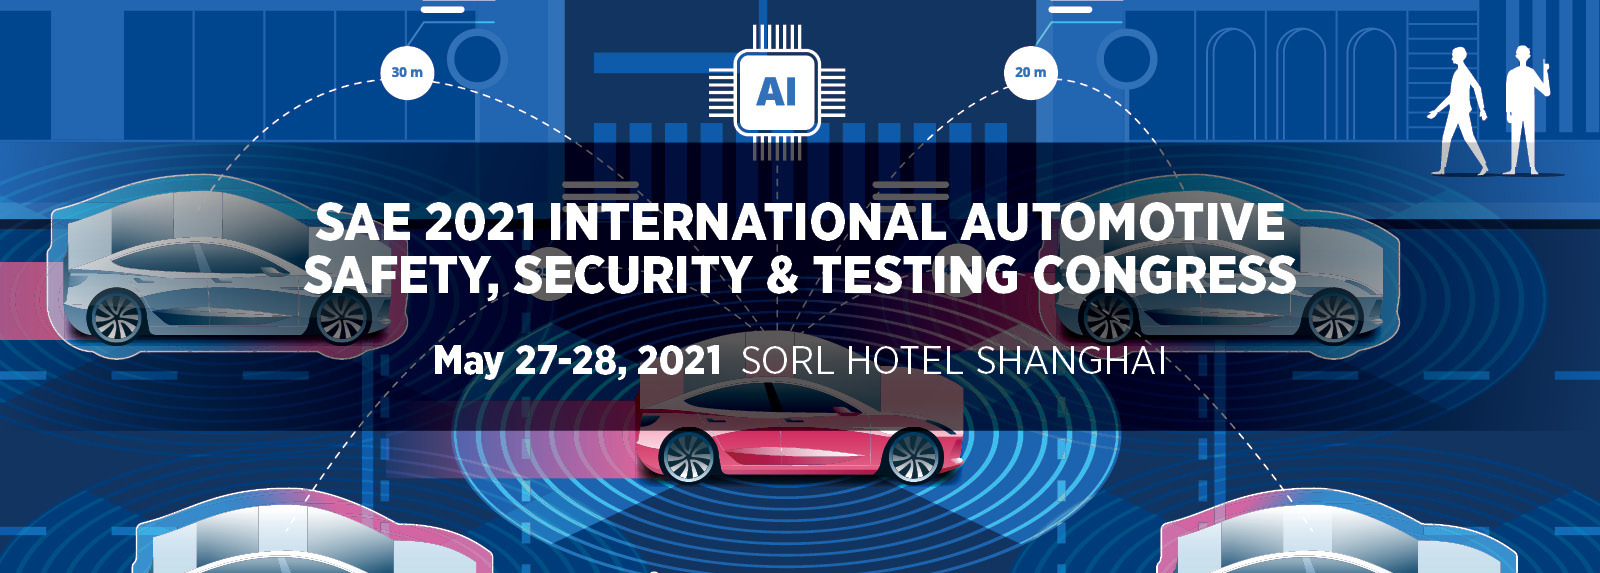 2021 International Automotive Safety, Security & Testing Congress